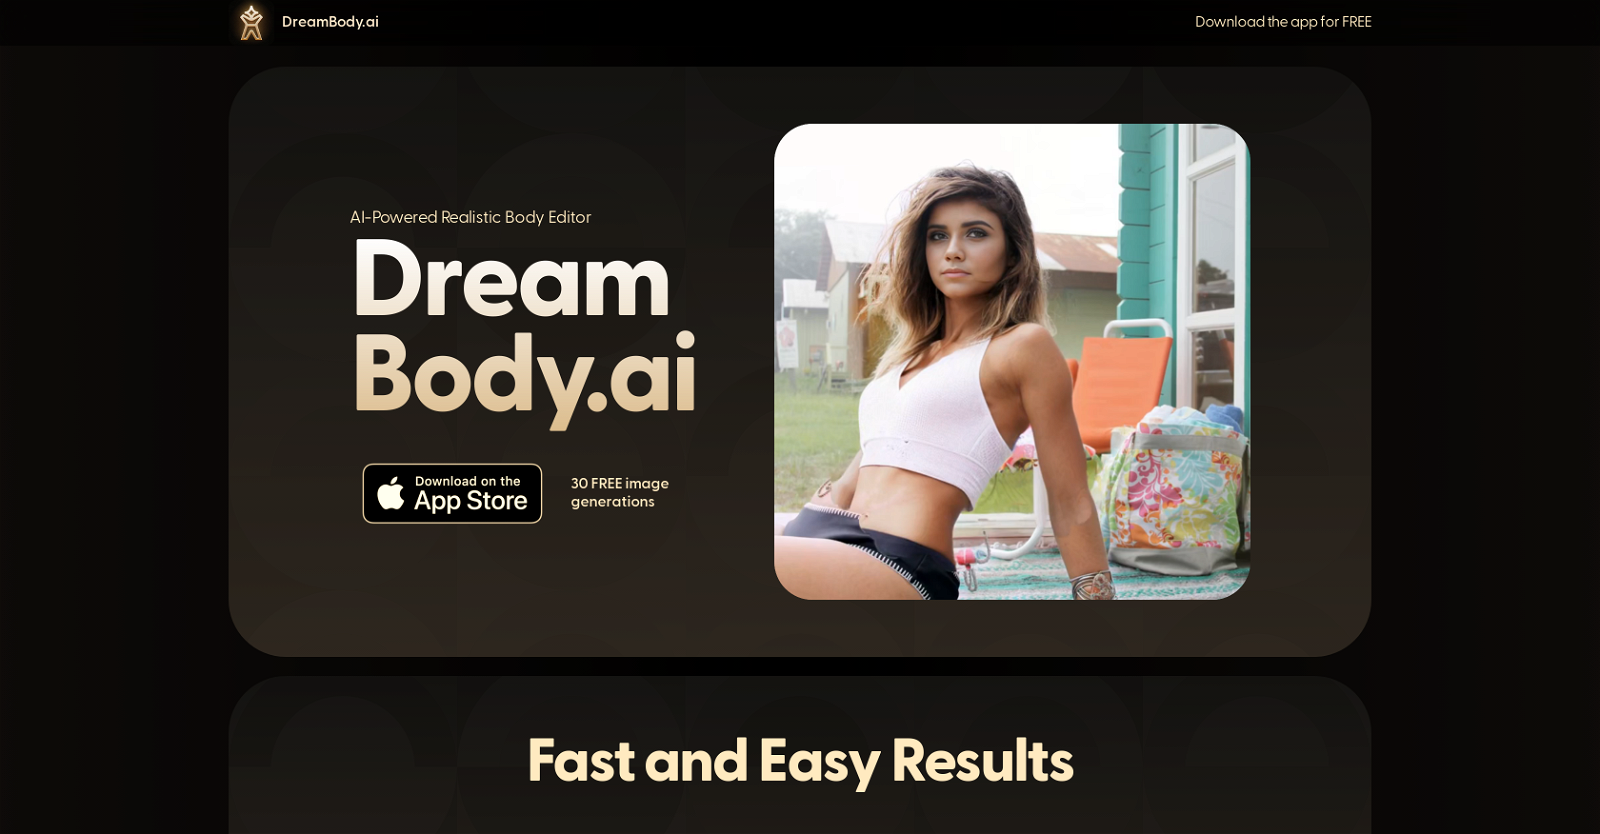 DreamBody website